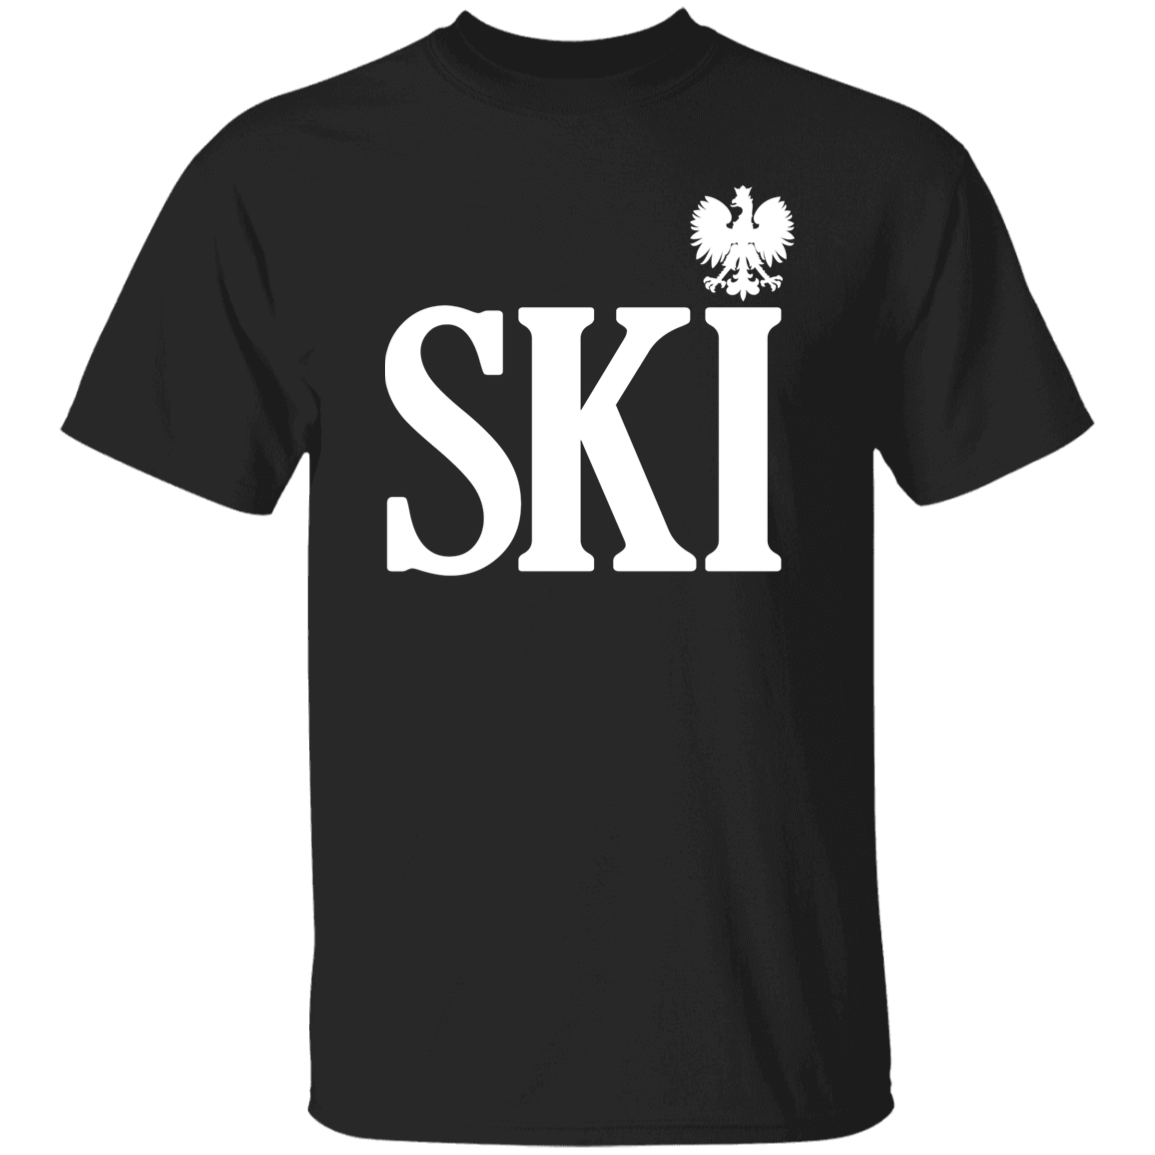 SKI Polish Surname Ending Apparel CustomCat G500 5.3 oz. T-Shirt Black S